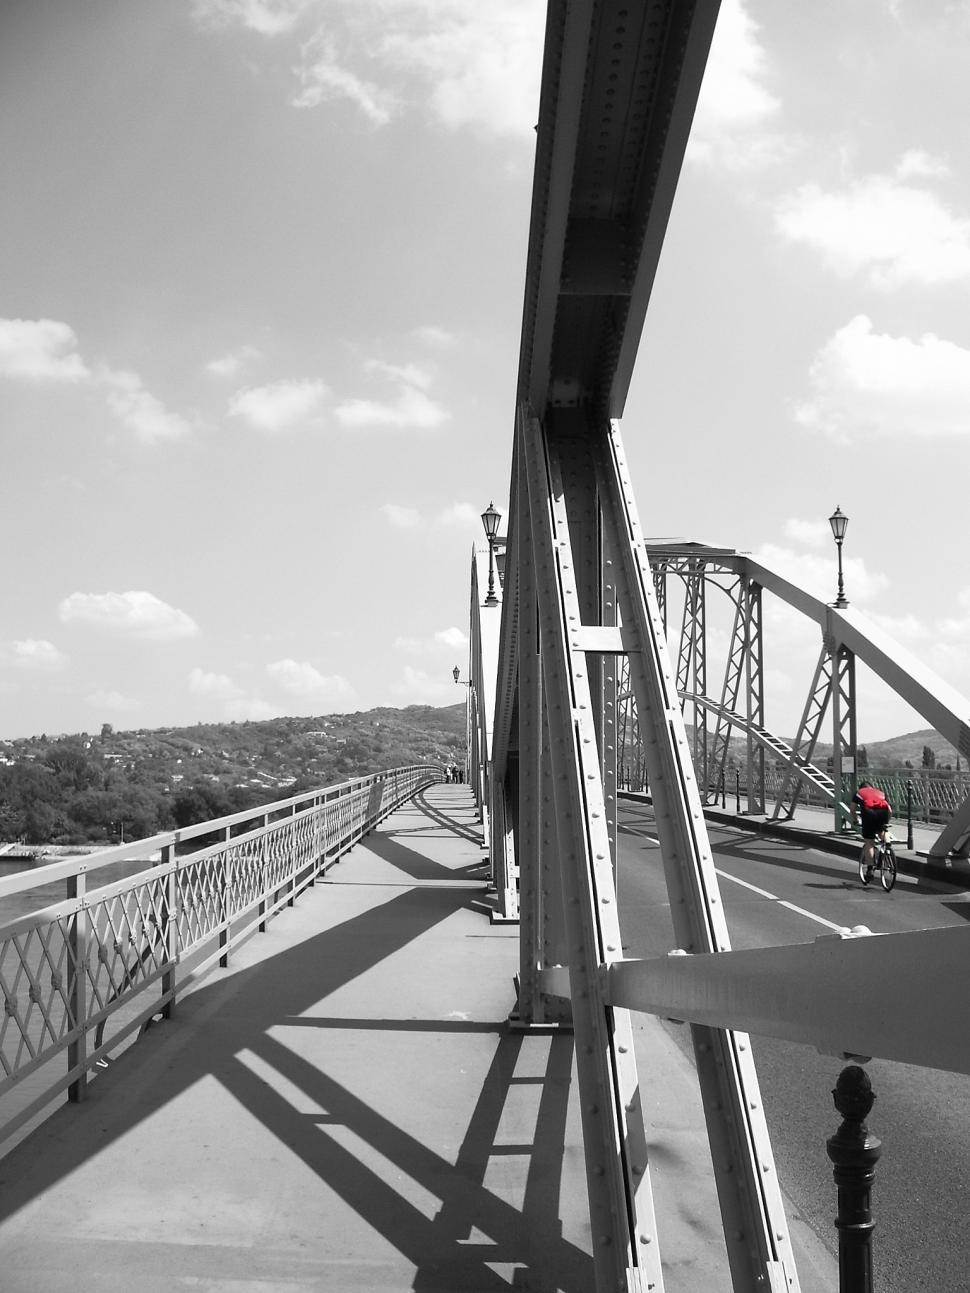 Free Image of Biker on the bridge 